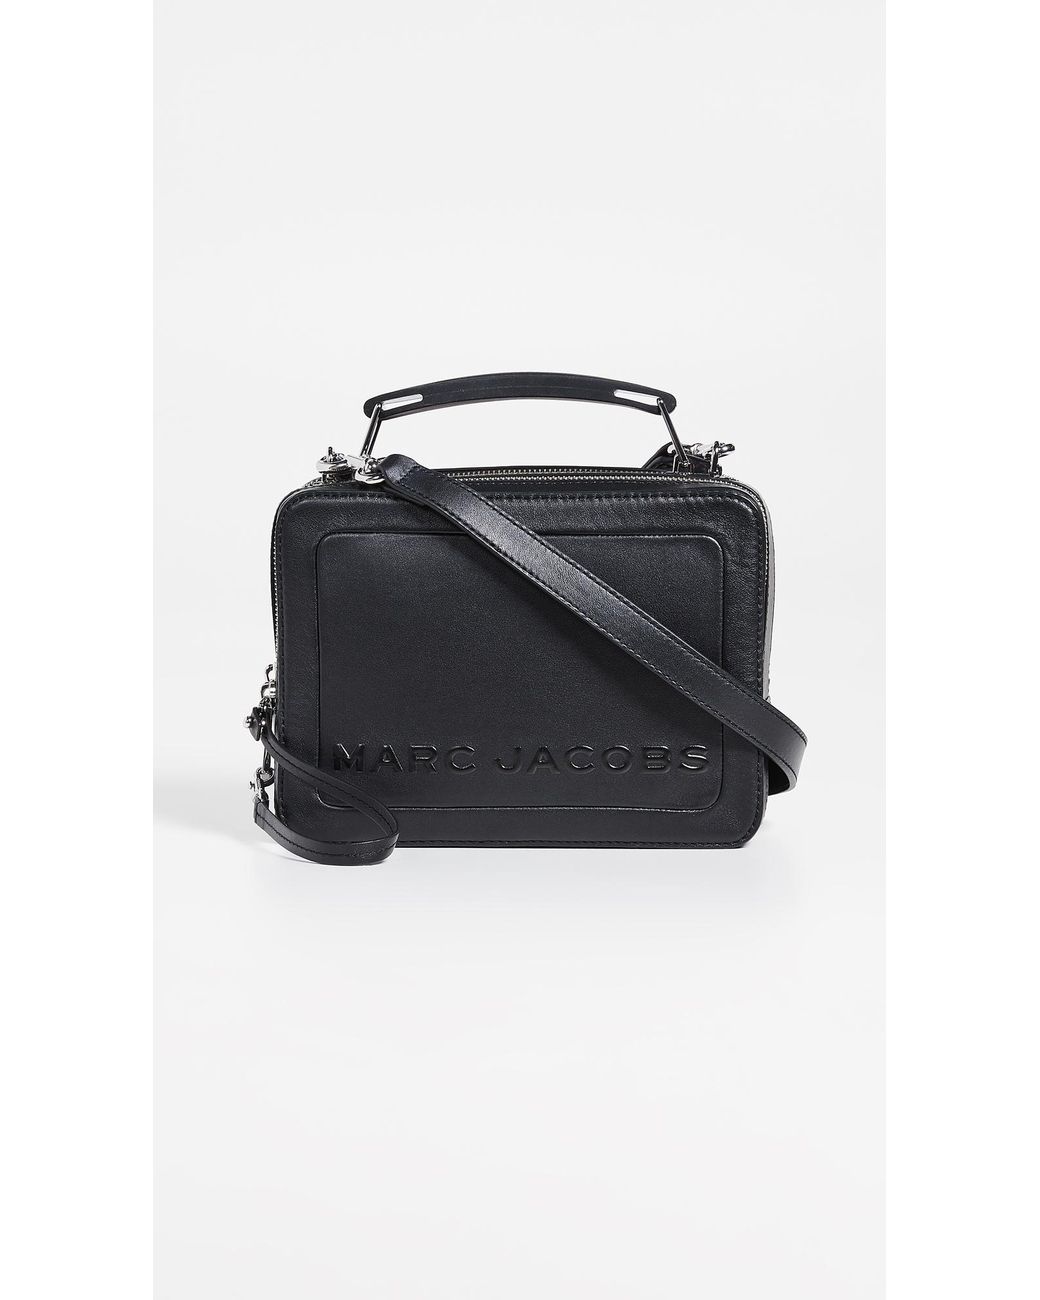 Marc Jacobs The Box 23 Leather Mini Crossbody Bag In Dove, ModeSens